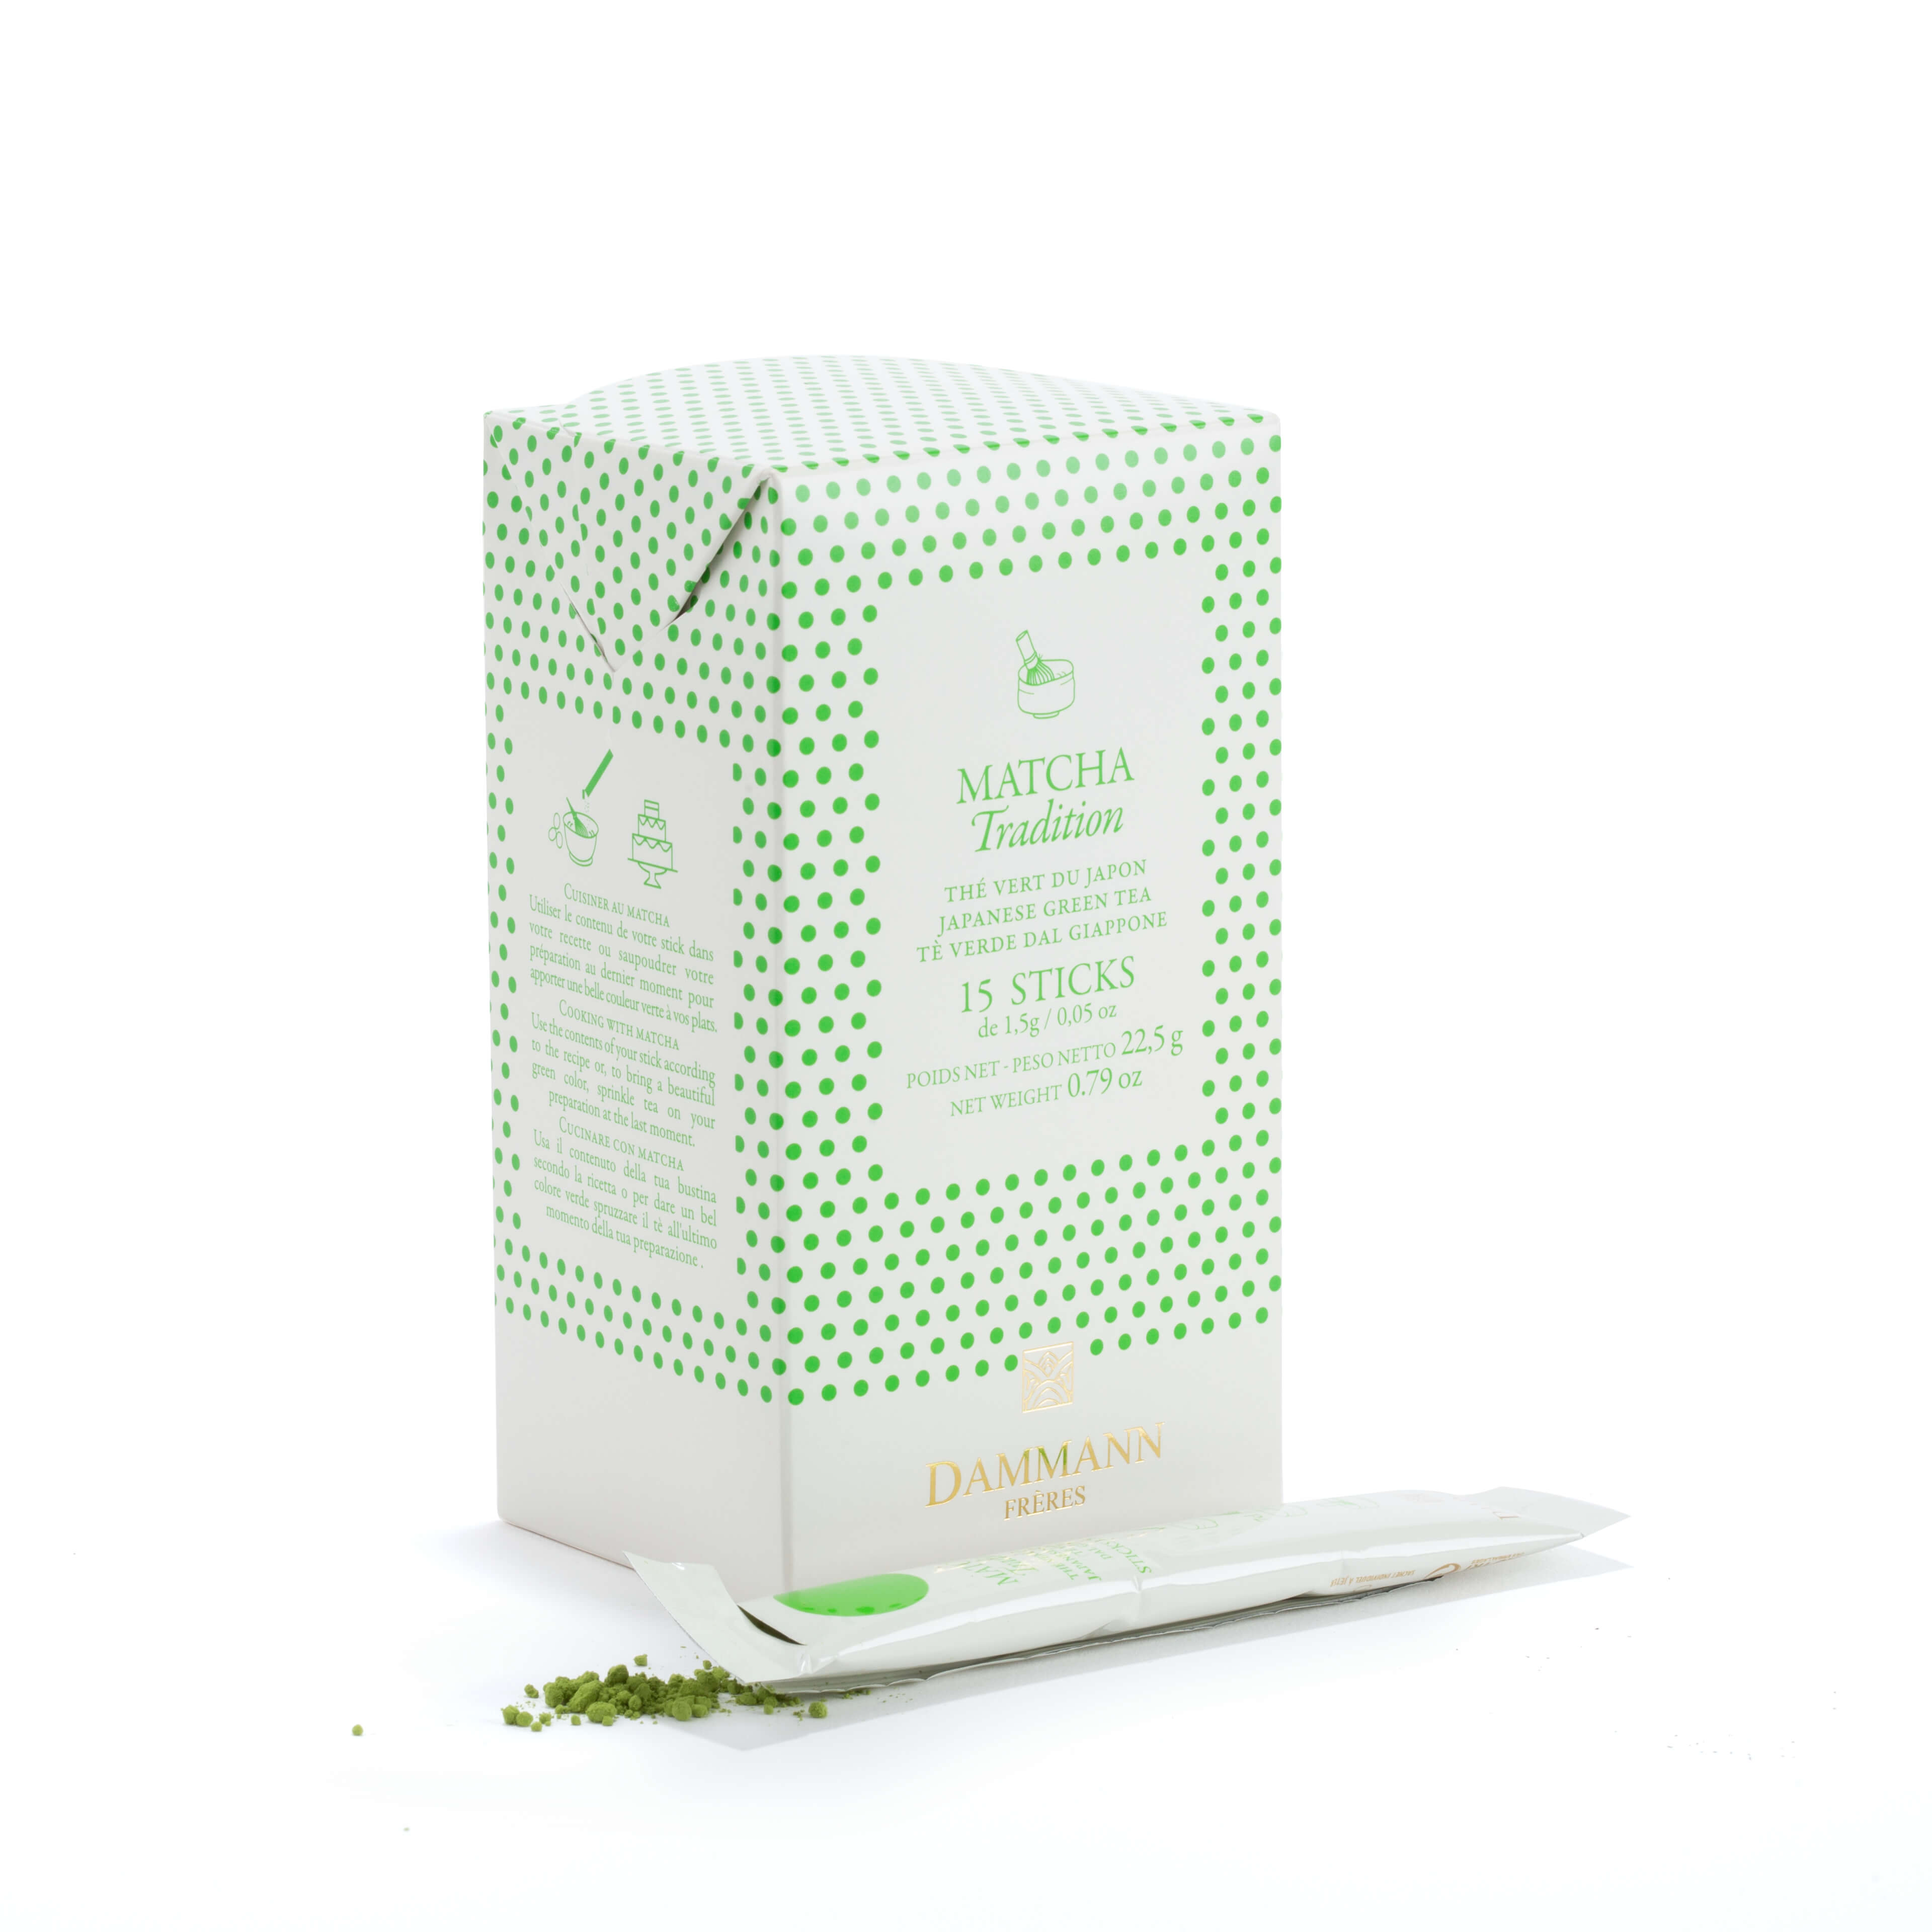 Matcha Dammann Japanese Green Tea, Matcha, 18-20-7000